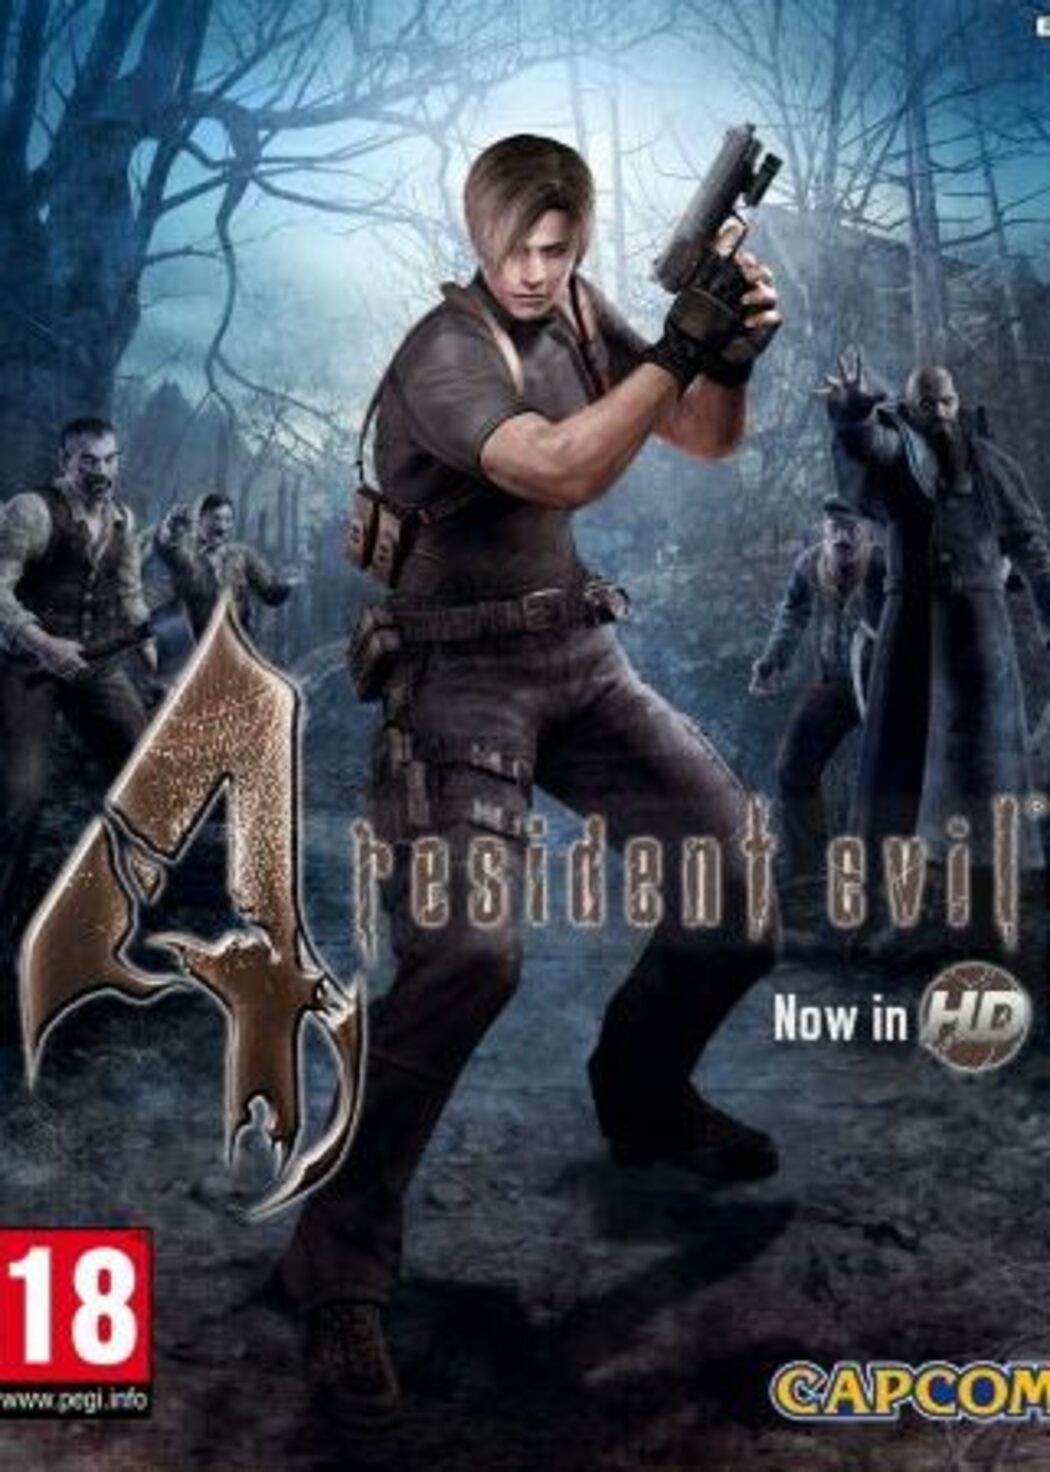 Biohazard 4 - Trial Edition file - Resident Evil 4 (2005) - ModDB